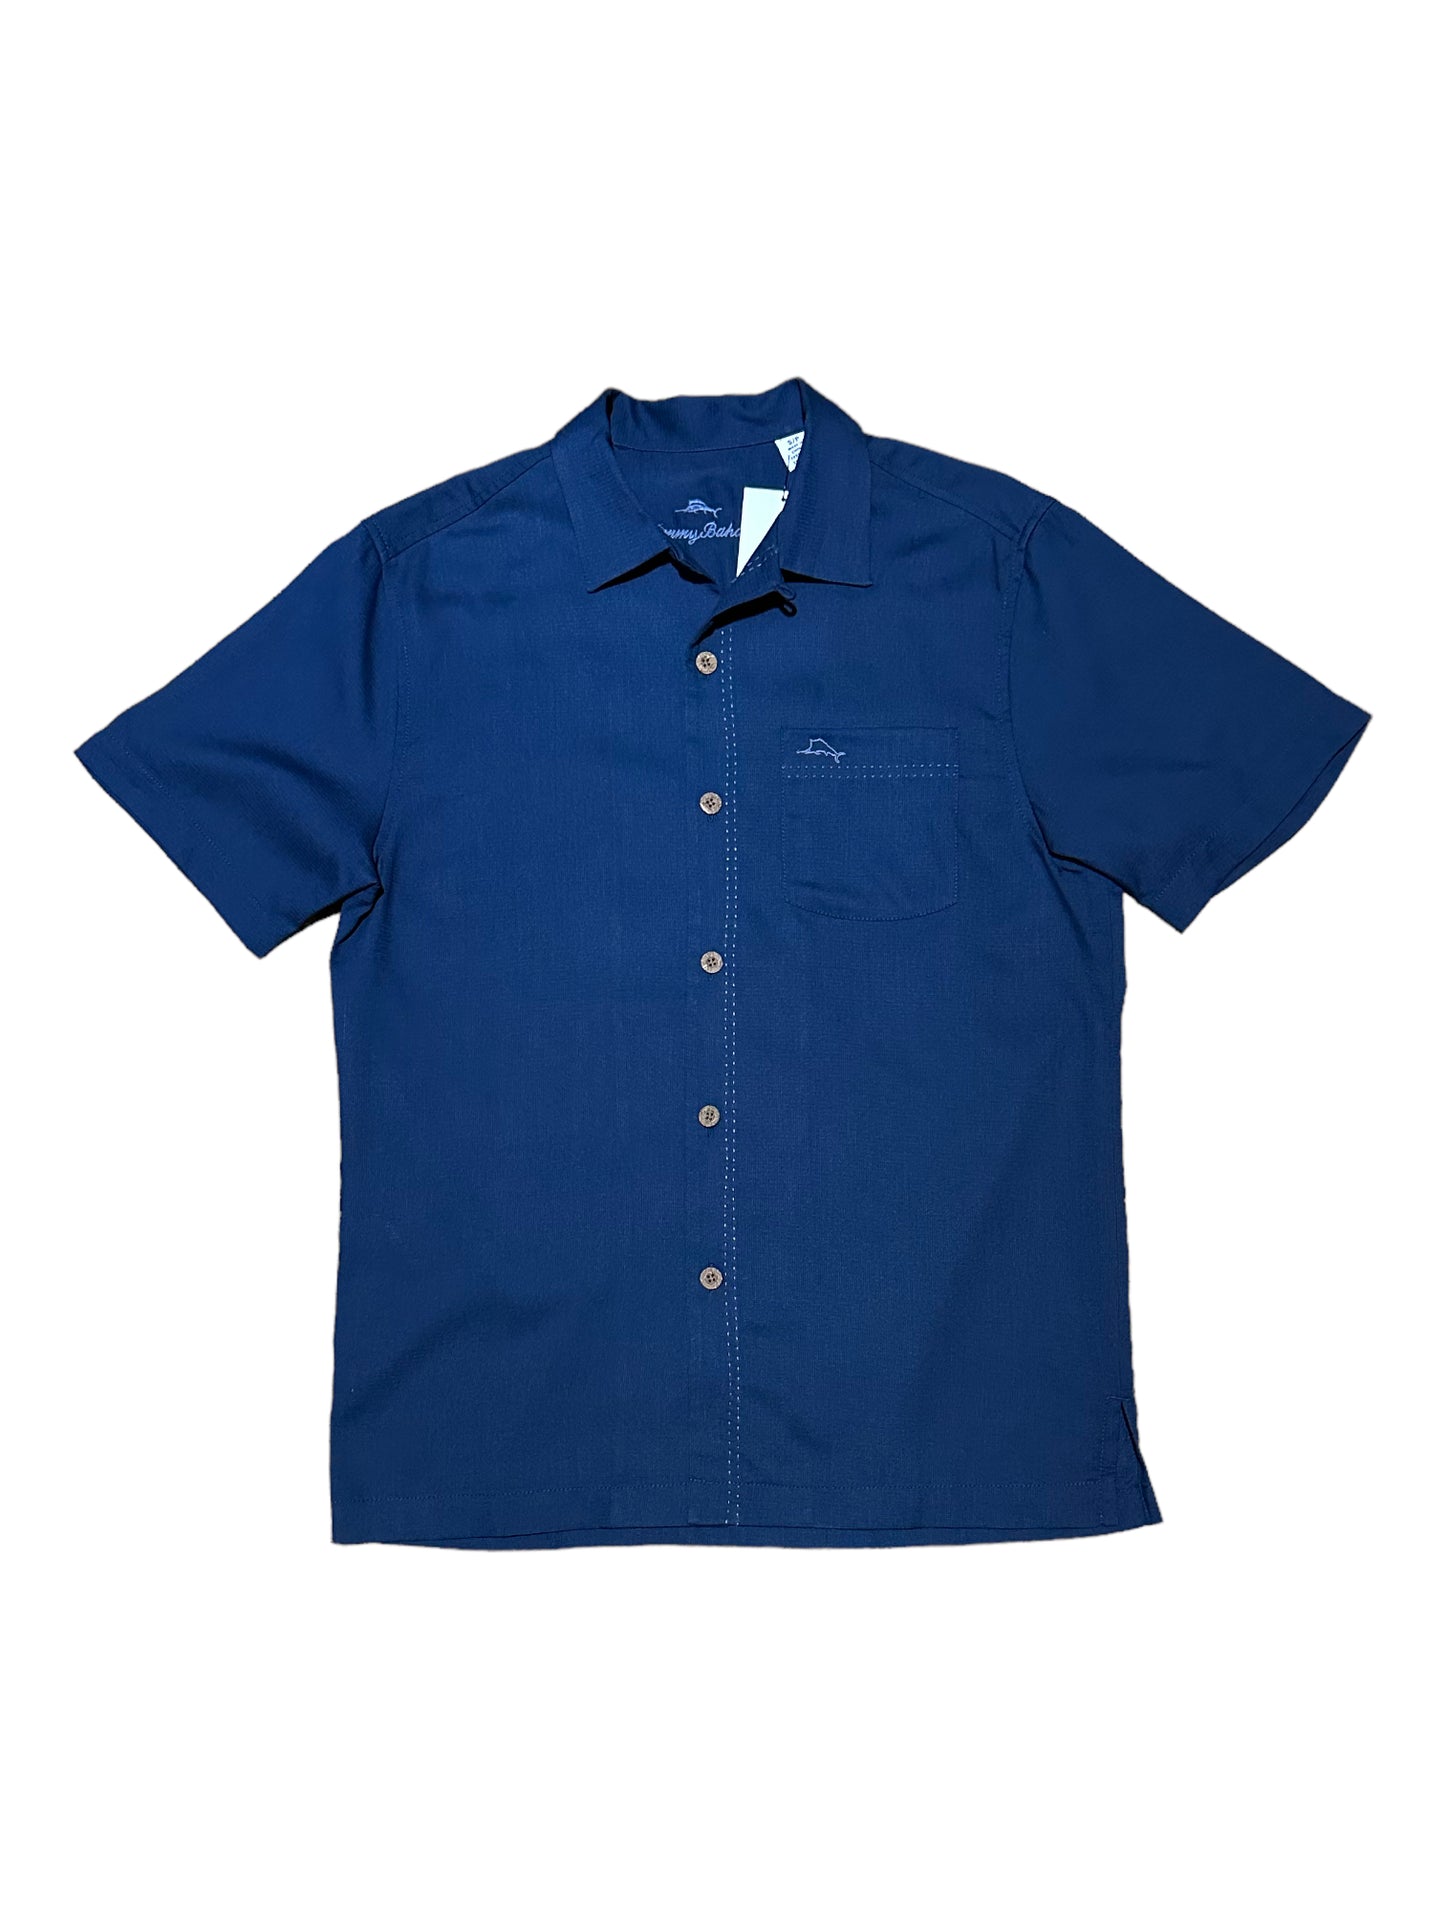 Tommy Bahama Navy Blue Silk Short Sleeve Button Up Casual Shirt